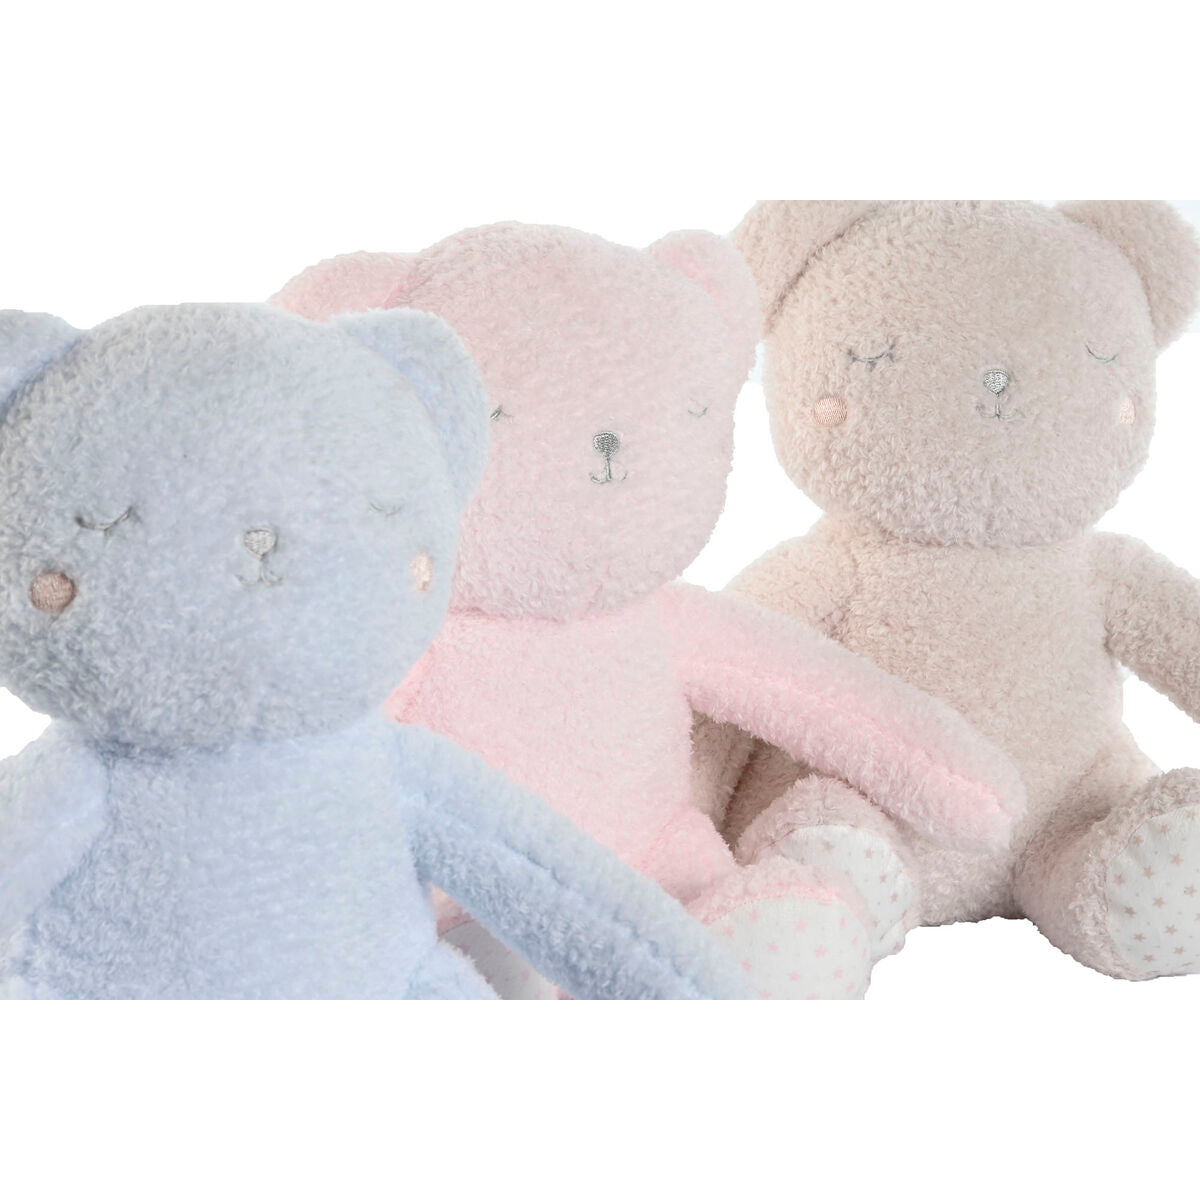 Gift Set for Babies Home ESPRIT Blue Beige Pink Polyester (3 Units)